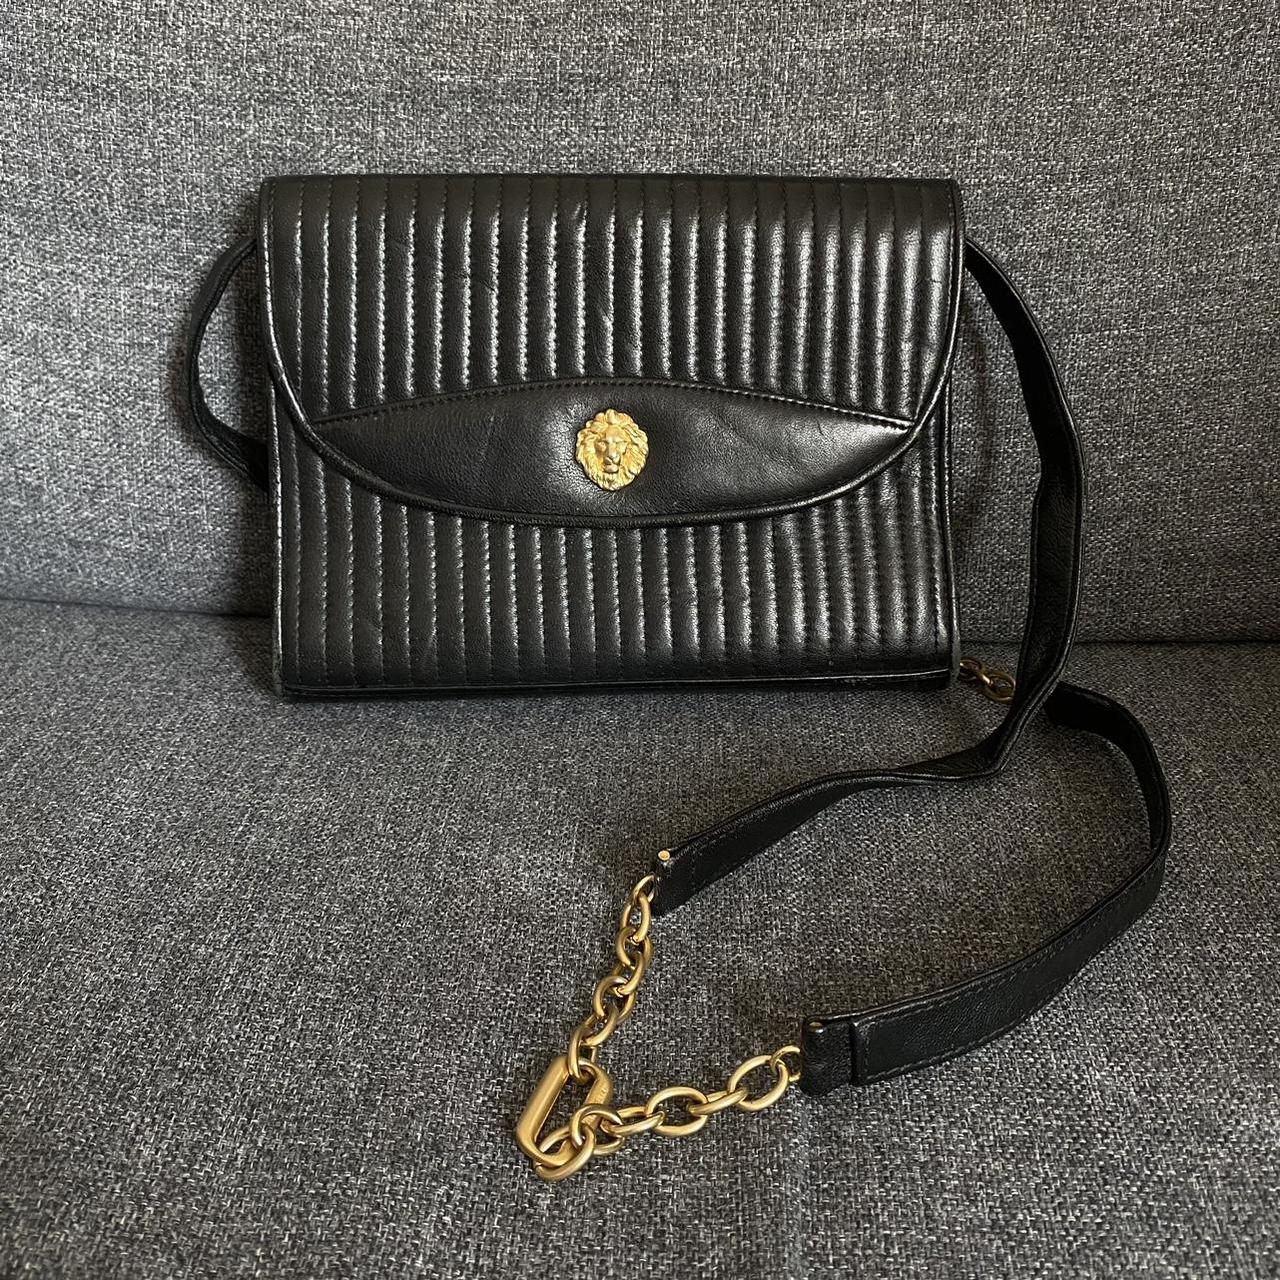 Brandy Melville black leather purse on Mercari